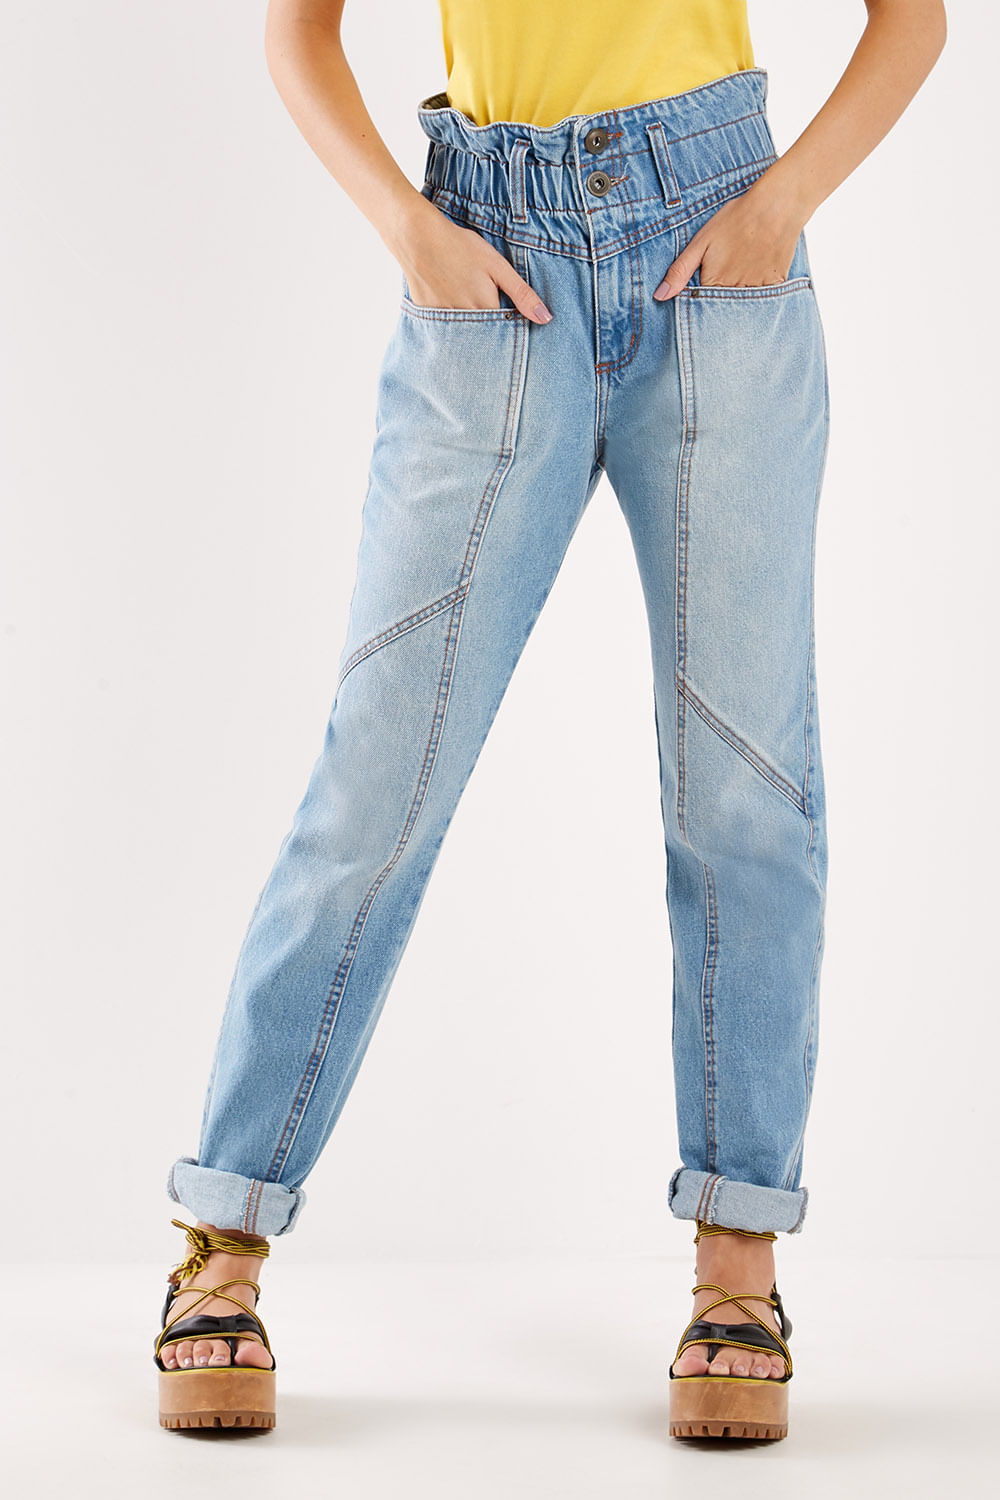 calça jeans franzida na cintura